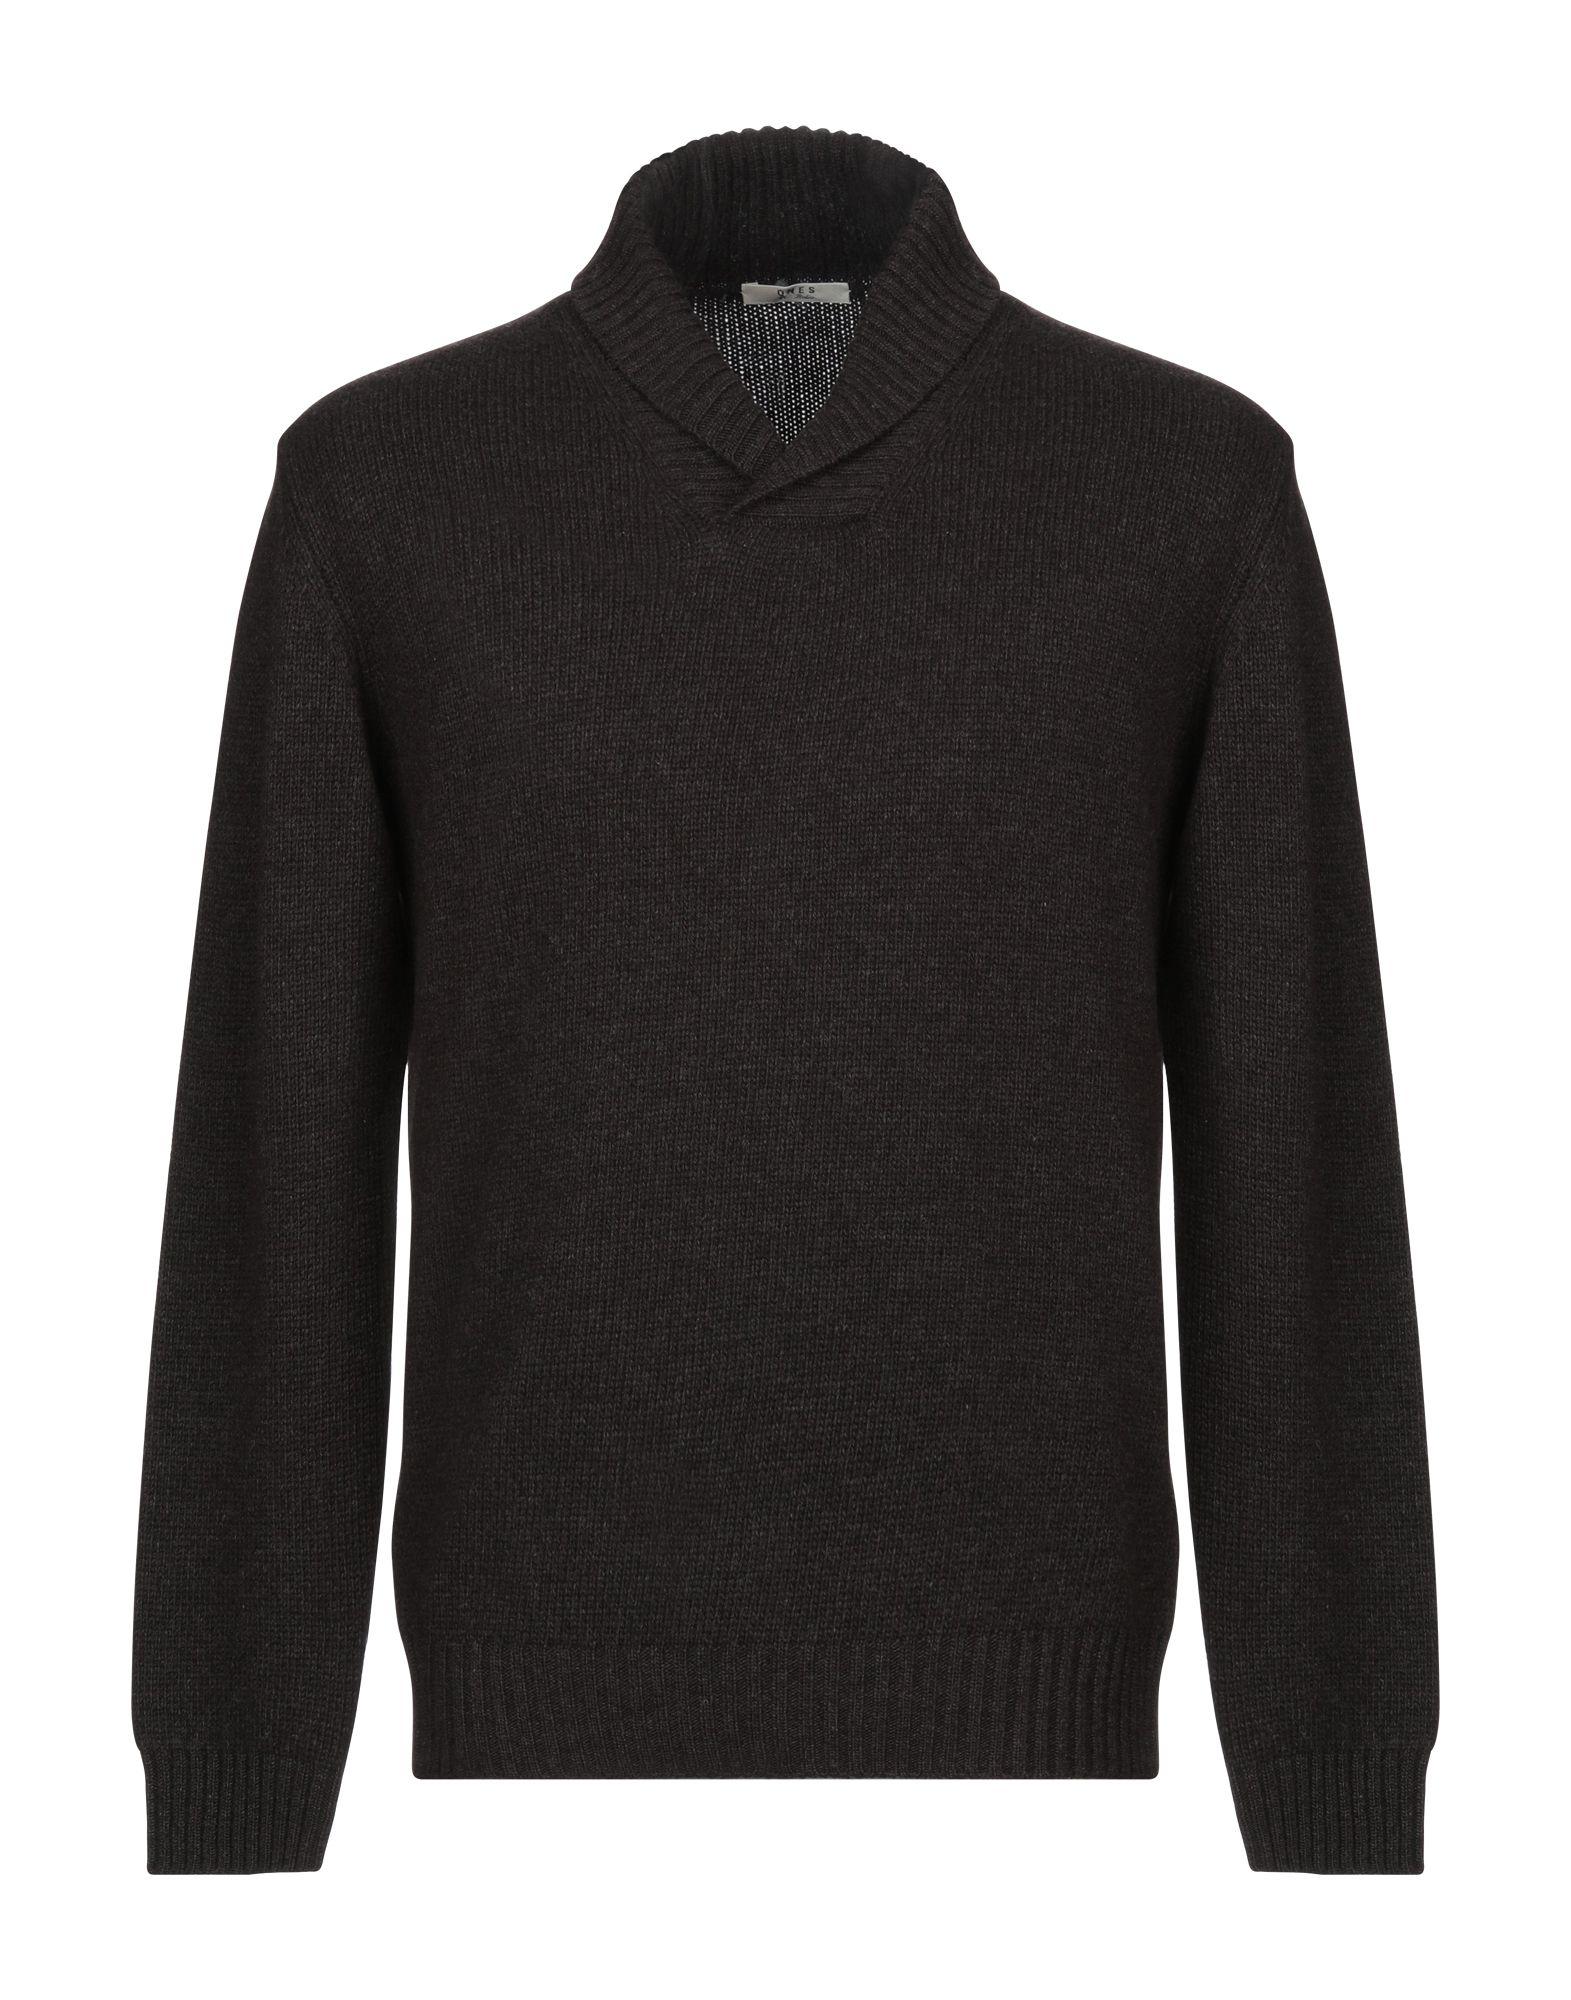 Ones Wool Sweater in Dark Brown (Brown) for Men - Lyst